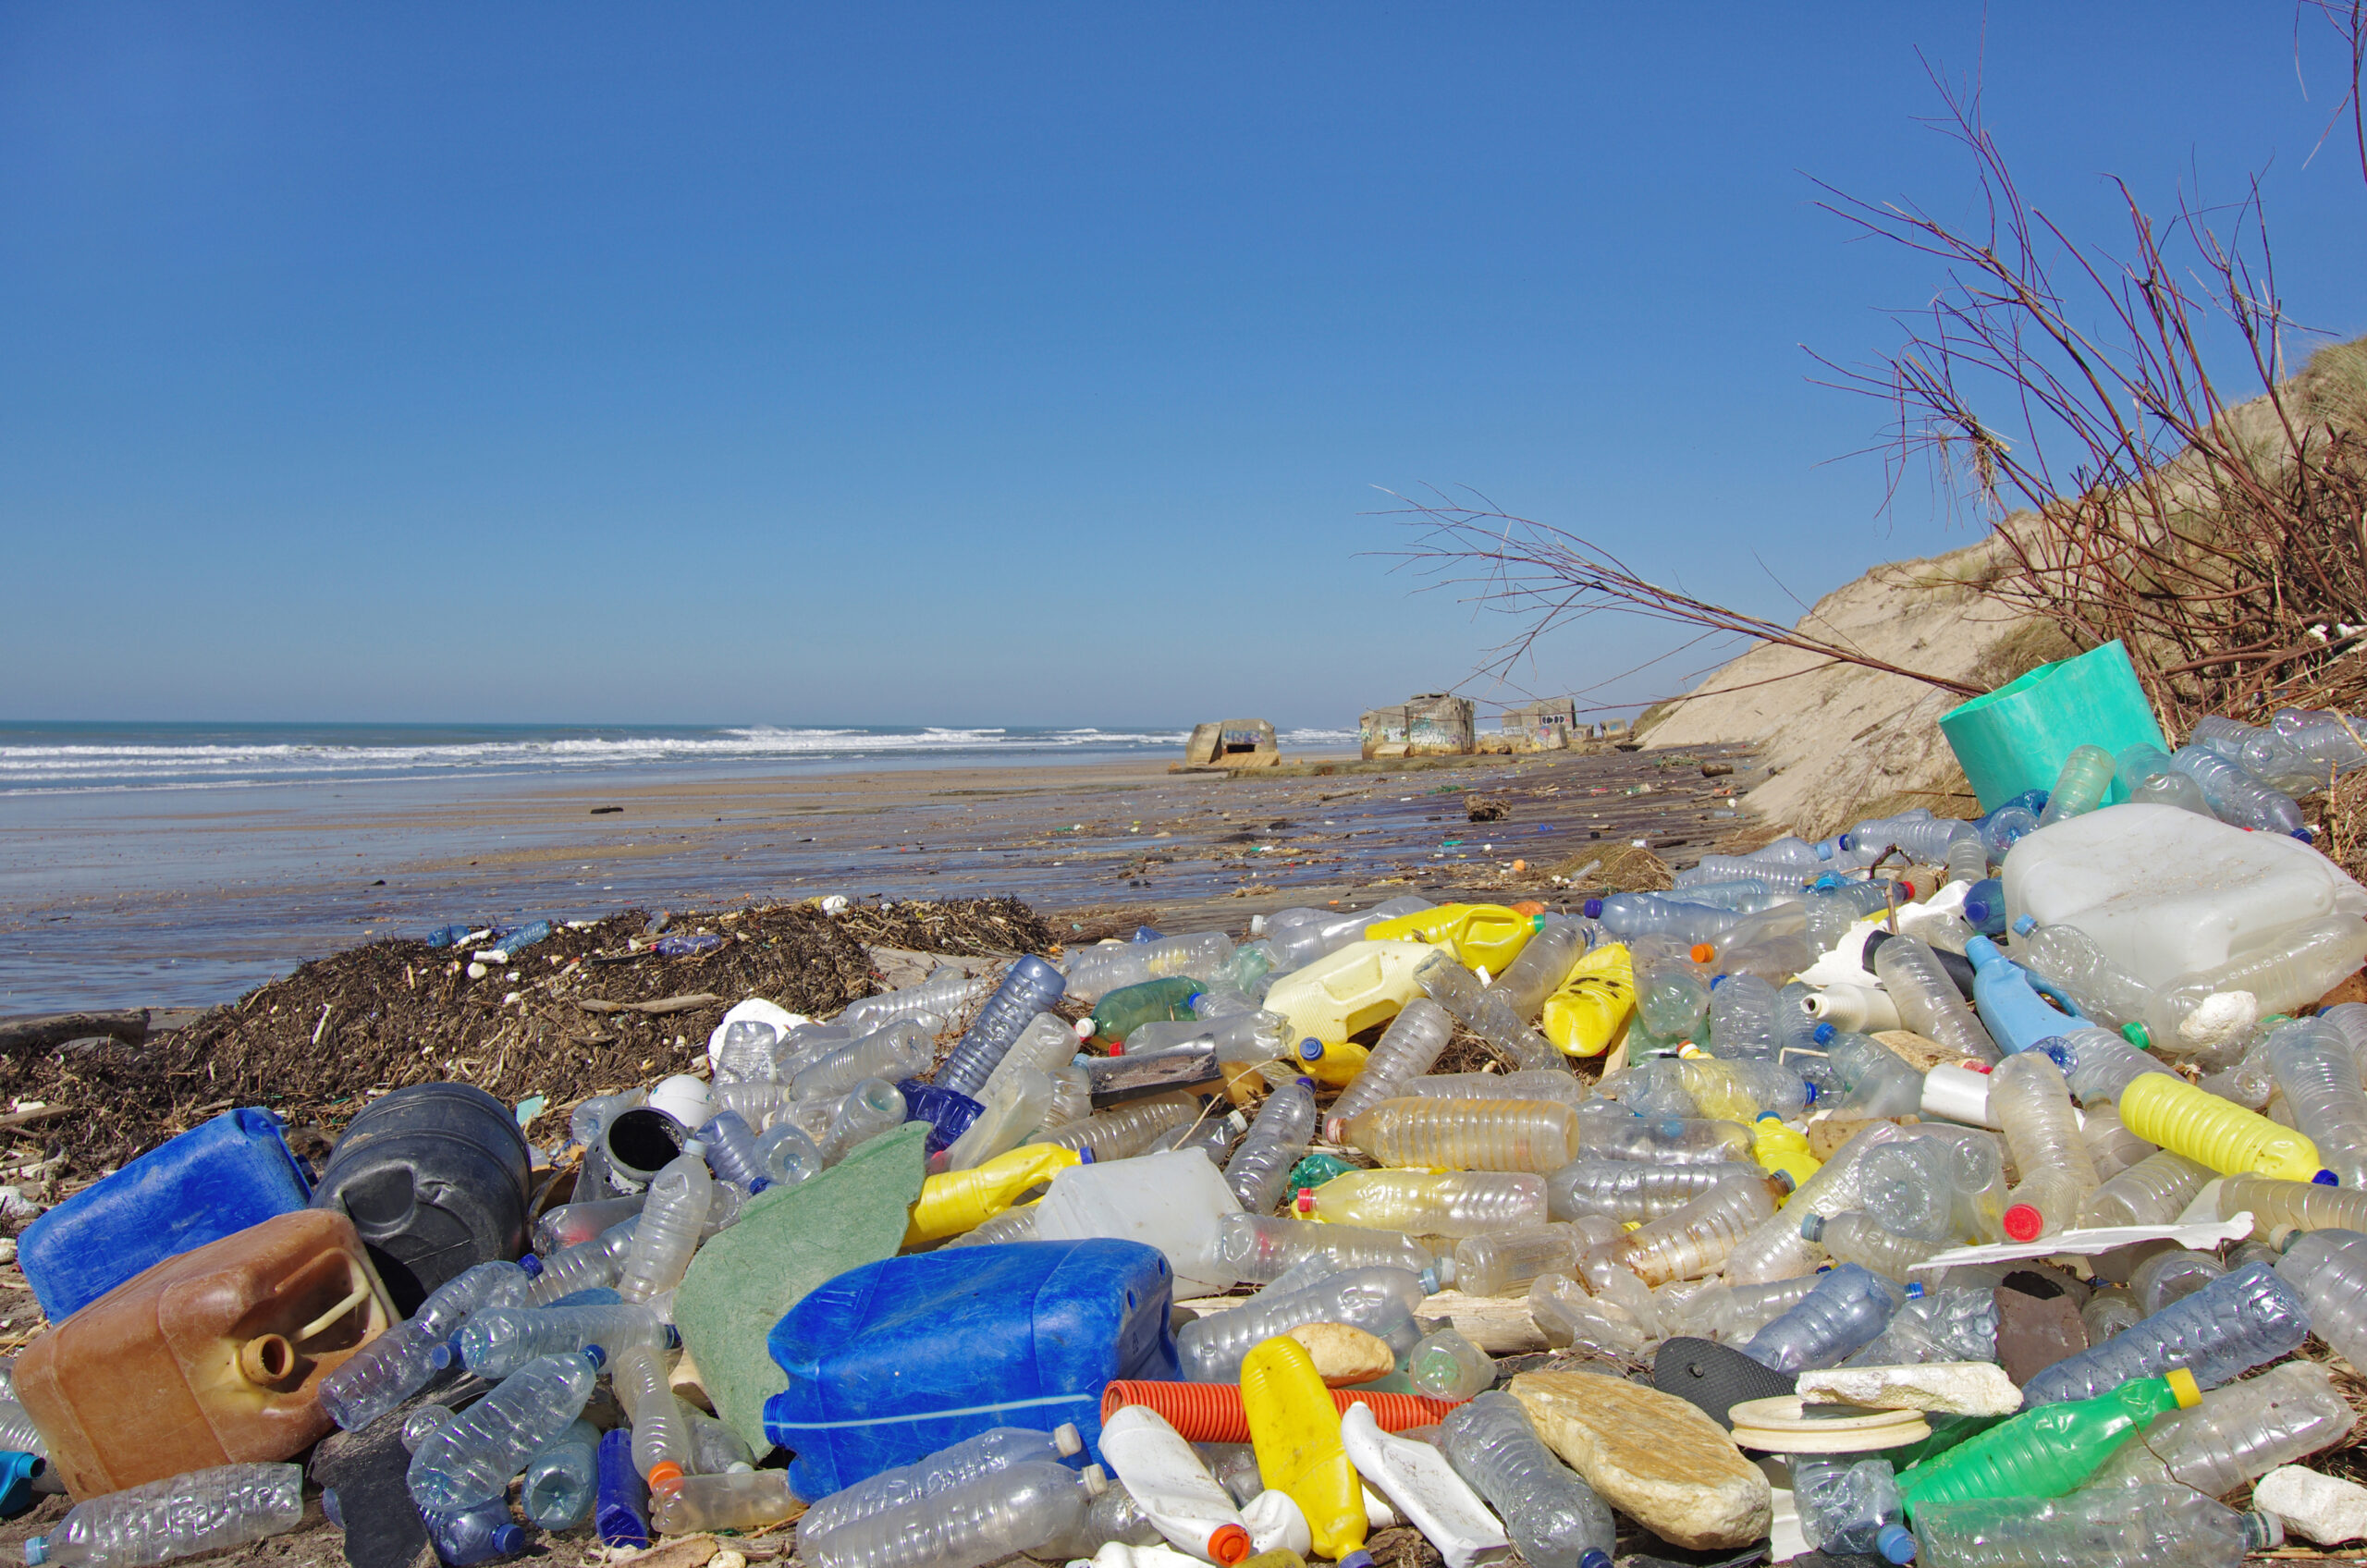 Teachers Demonstrate Human Impact on the Environment Through Plastics